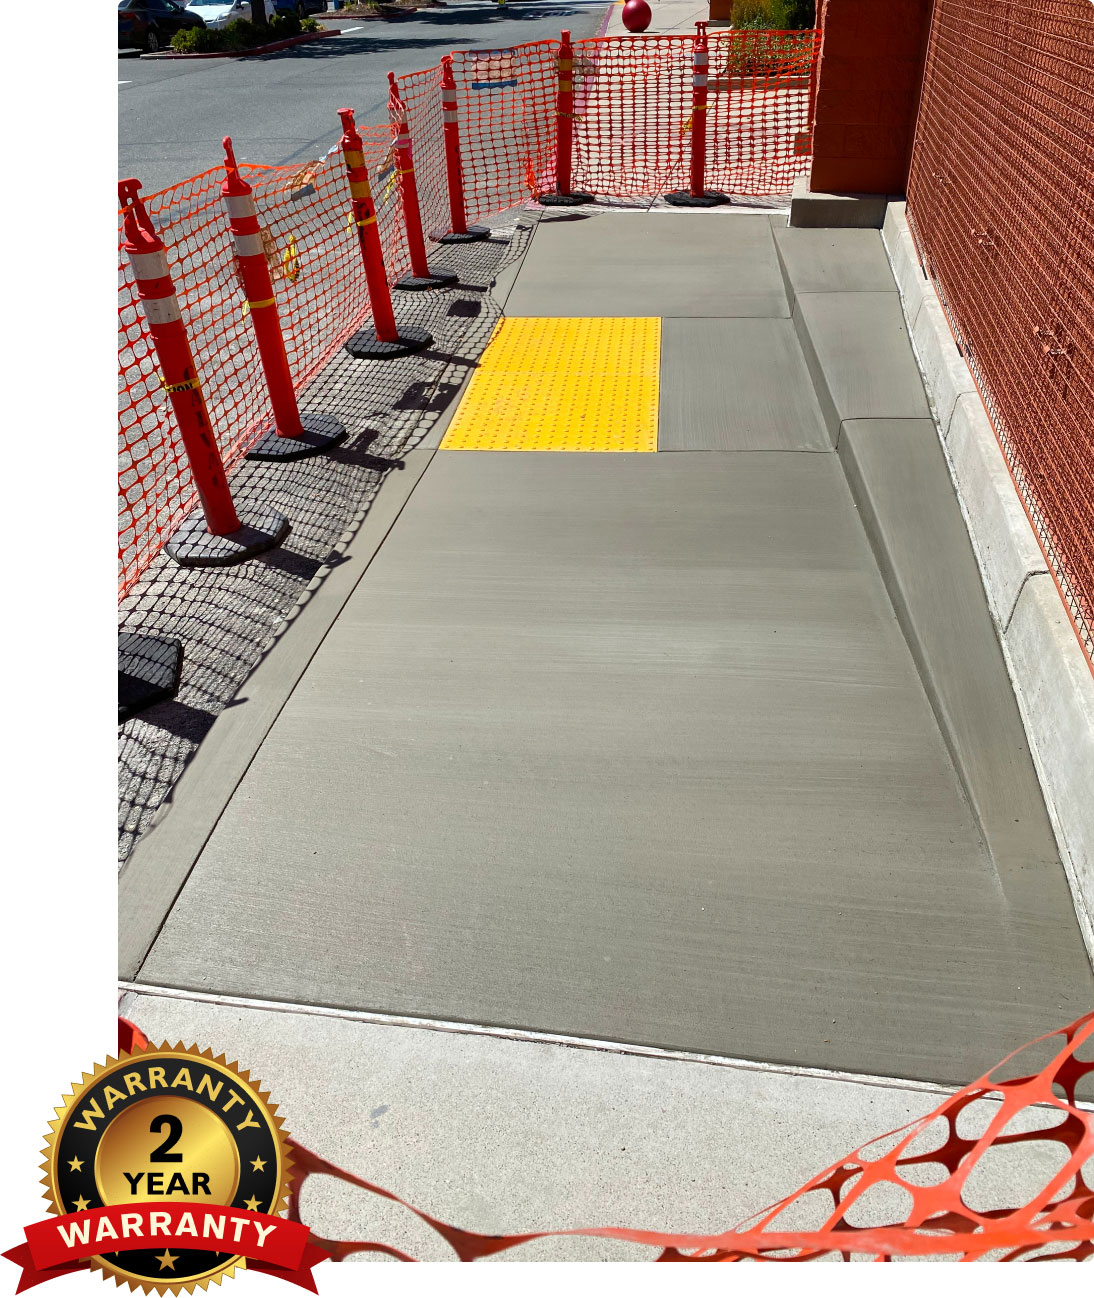 cavlac paving in San Jose concrete and asphalt ada compliance 2 year warranty